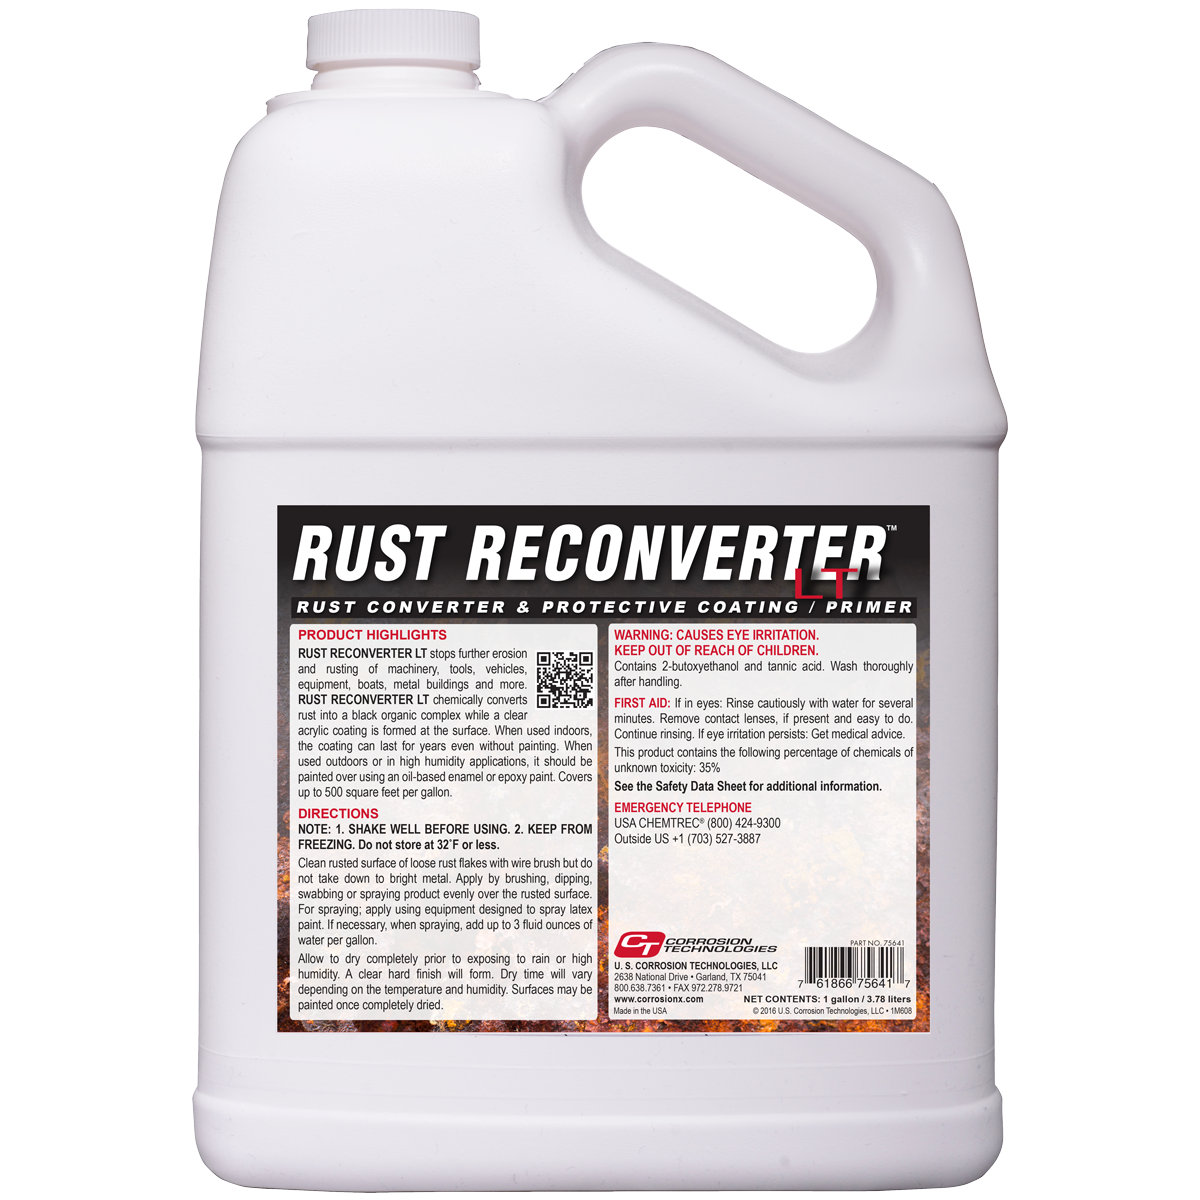 Rust converter